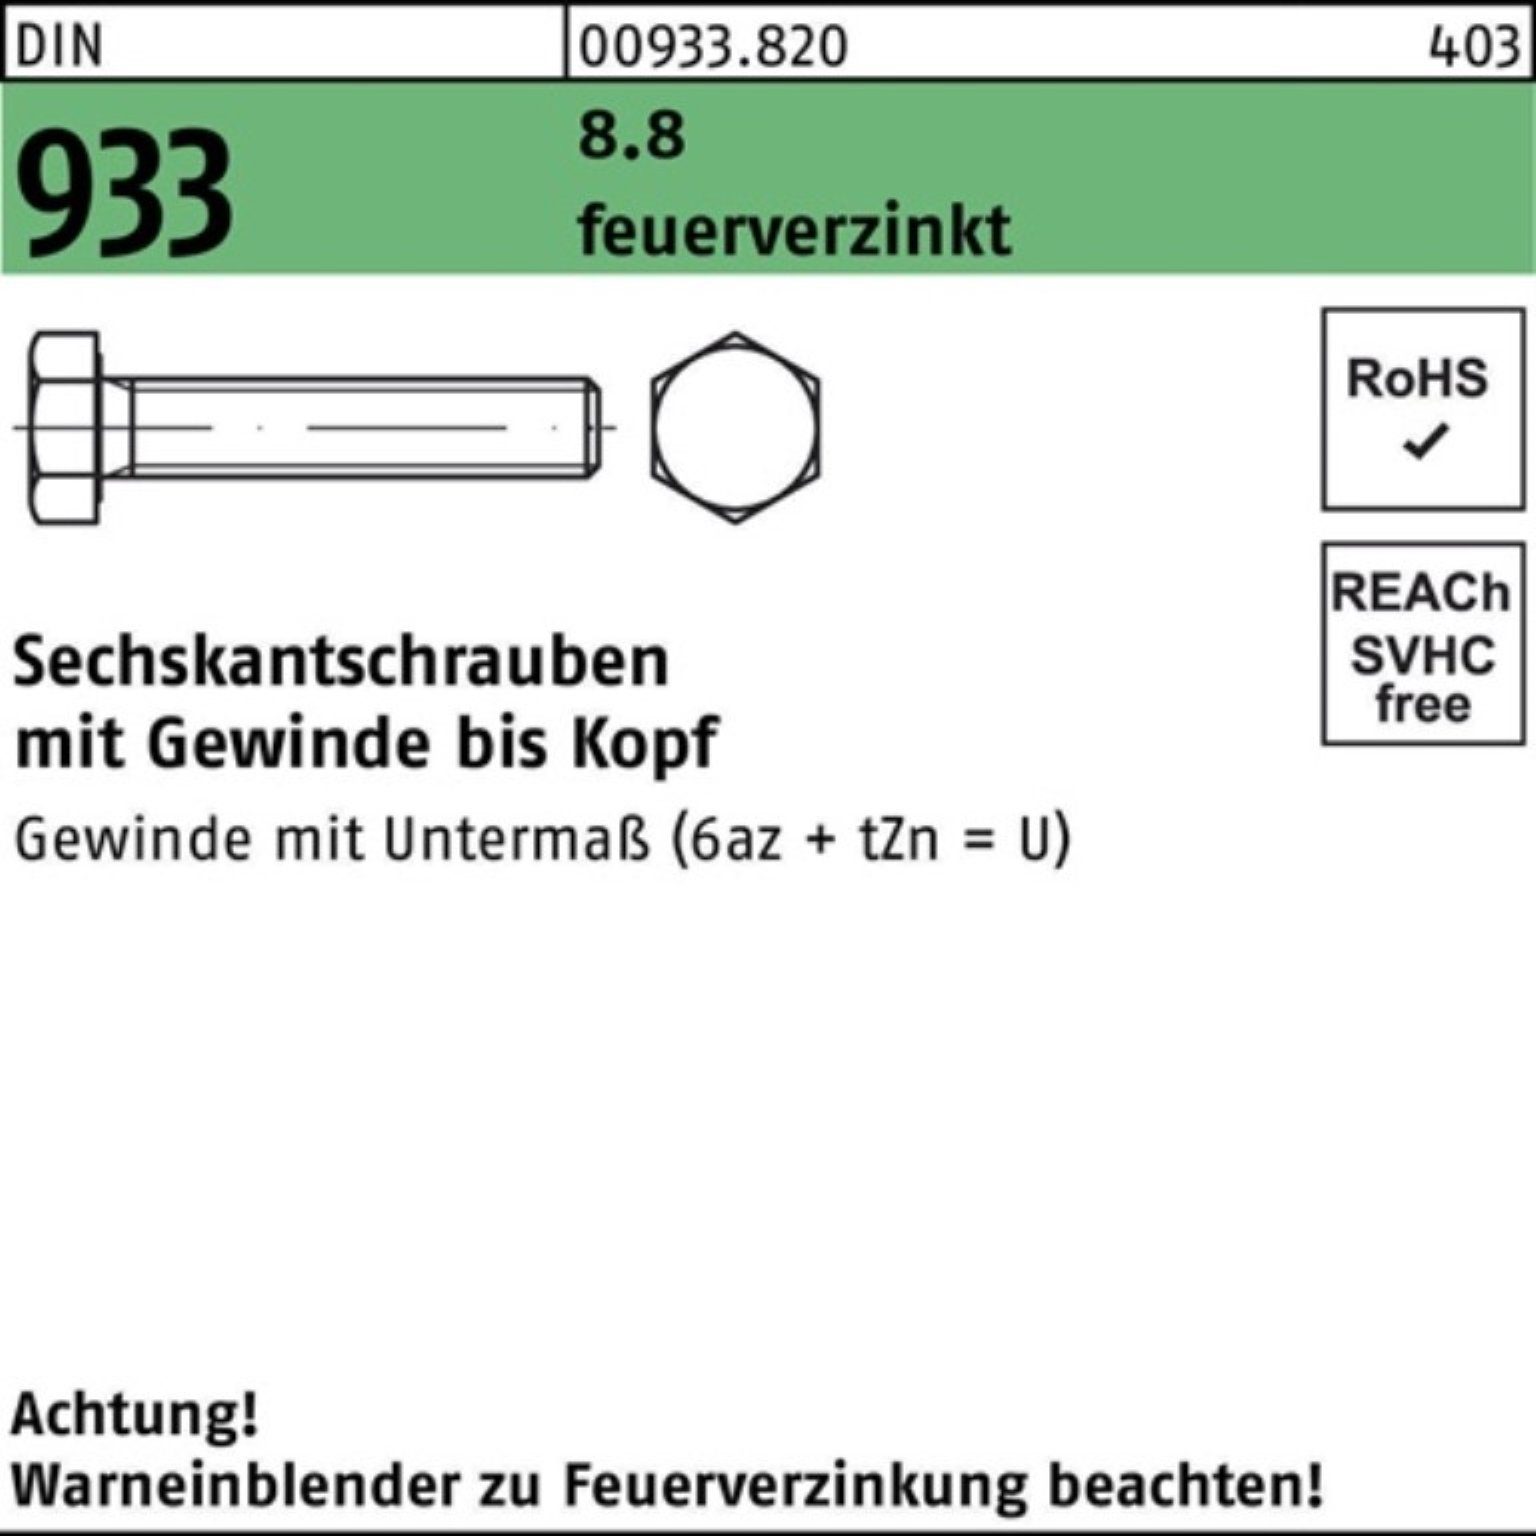 VG Stü 50 M12x 8.8 DIN Sechskantschraube Reyher Pack 70 feuerverz. 100er 933 Sechskantschraube